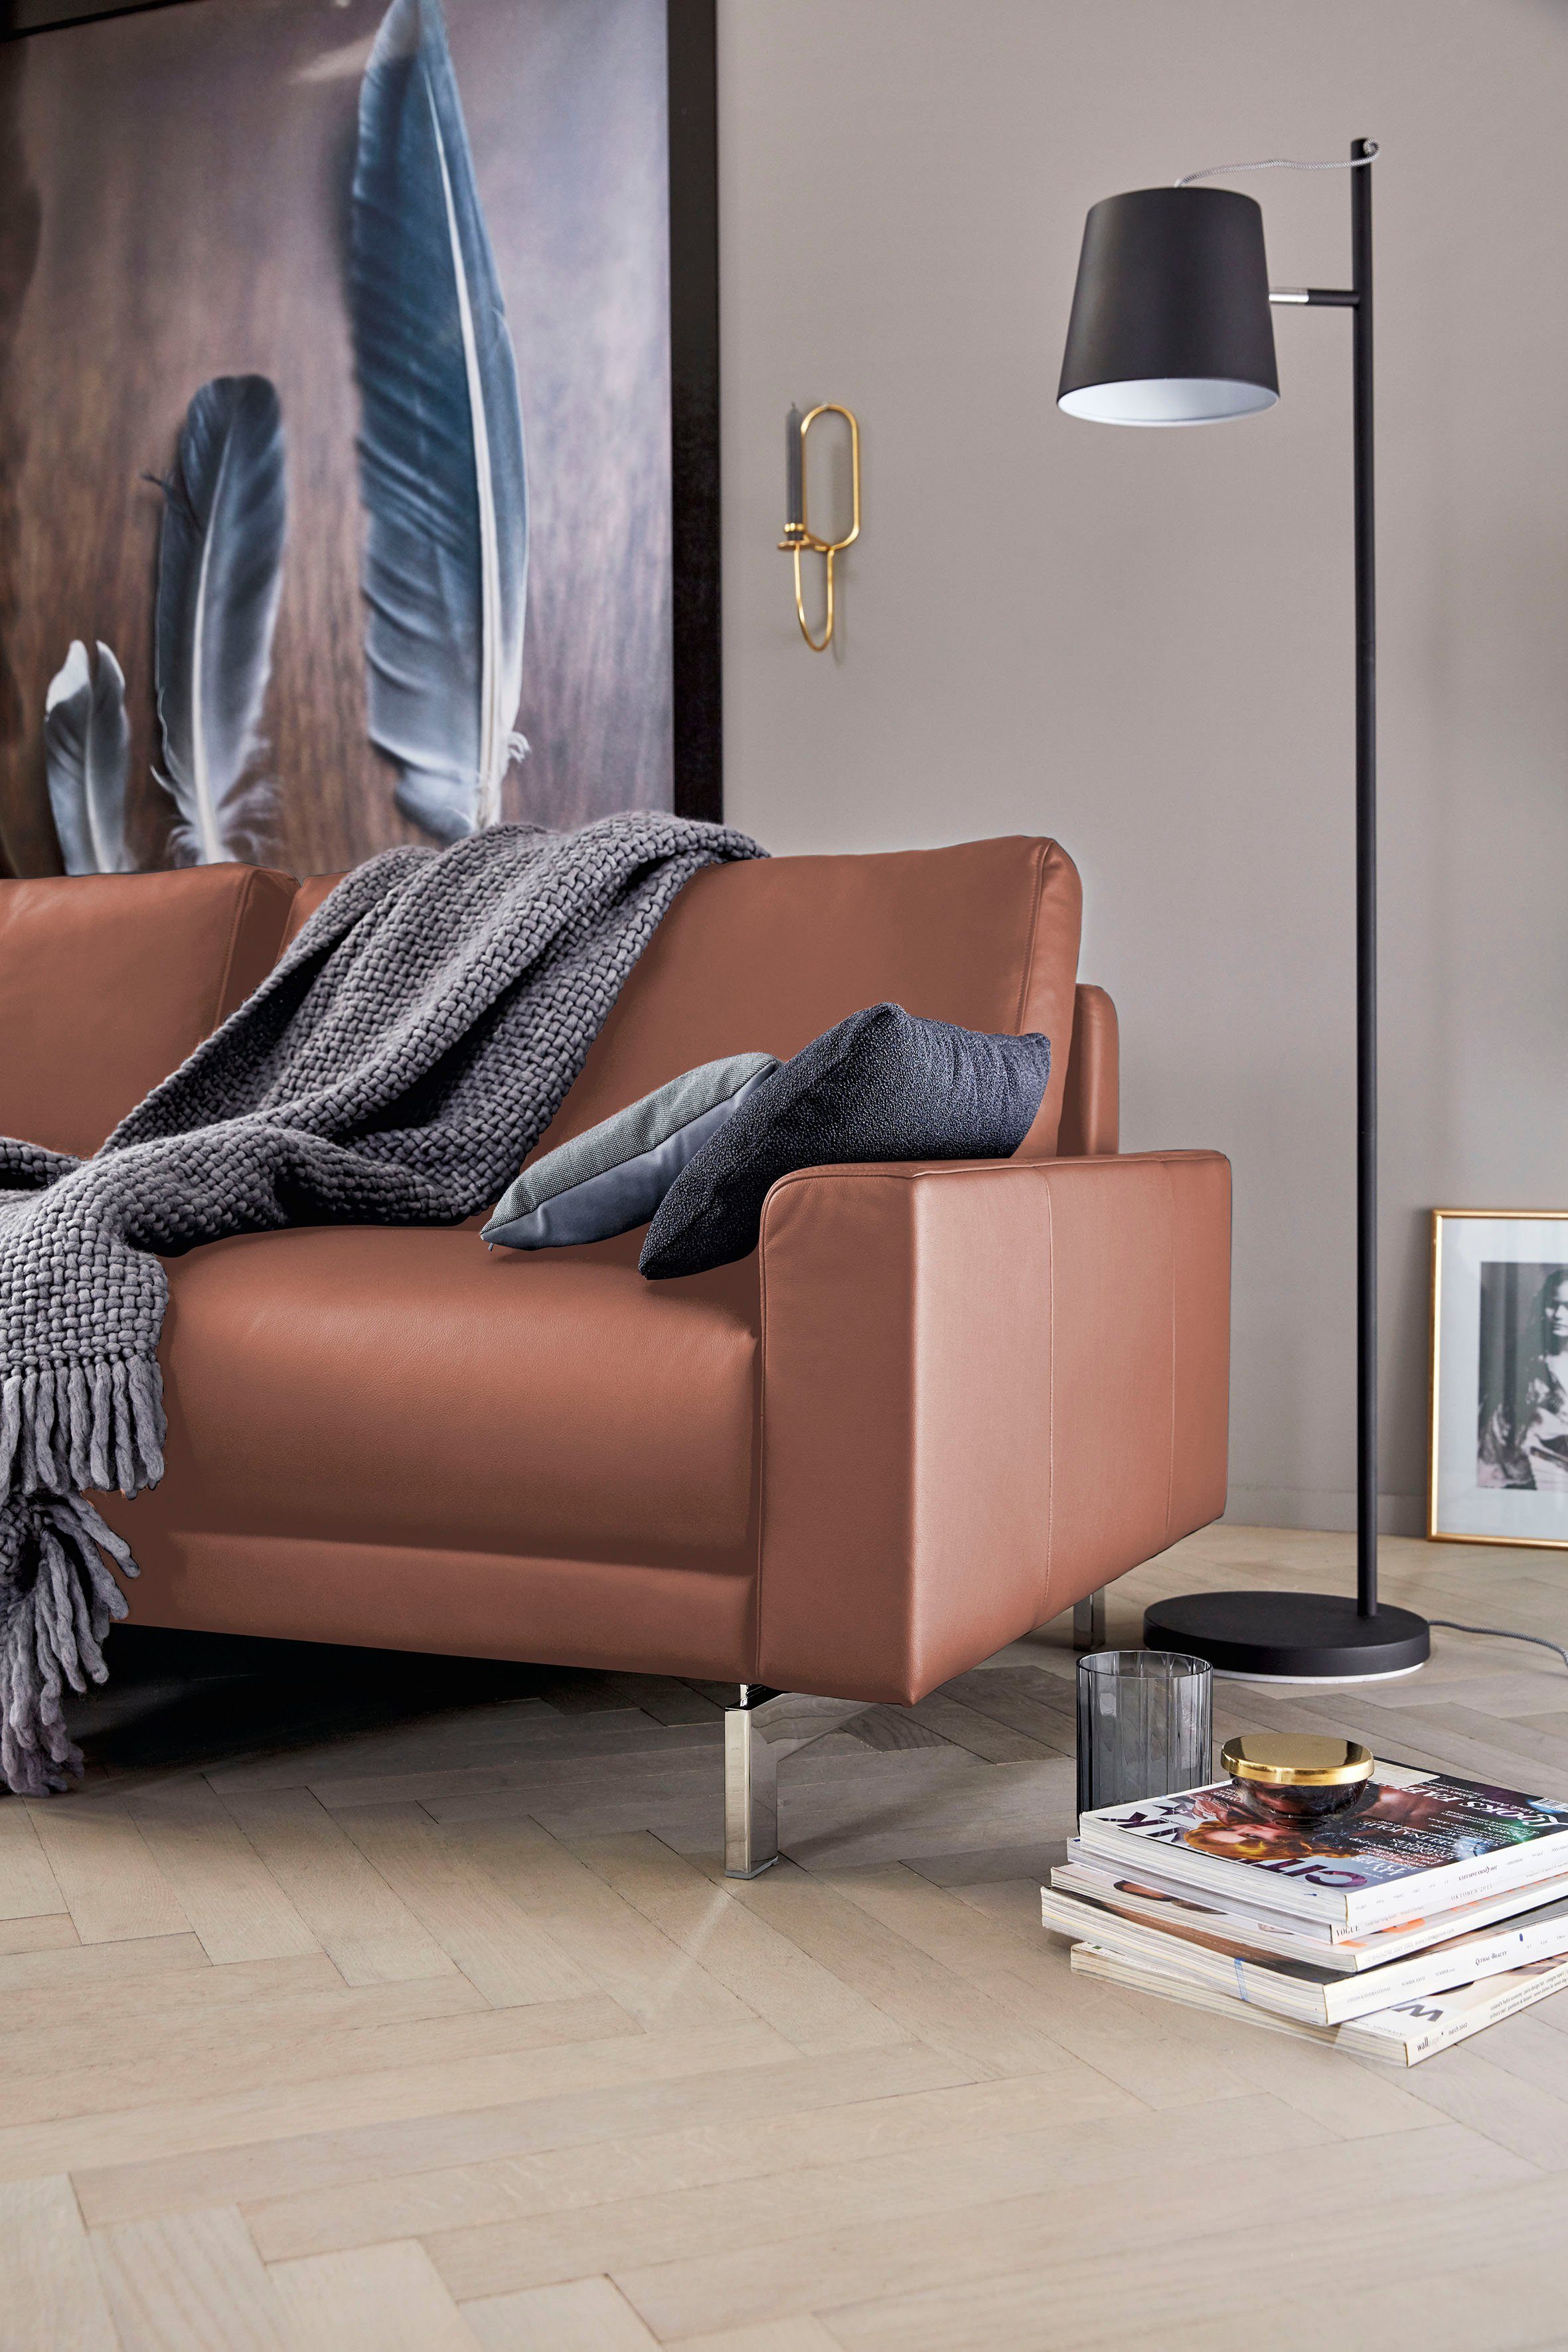 sofa hs.450, 164 cm 2-Sitzer Armlehne hülsta Breite chromfarben glänzend, niedrig, Fuß